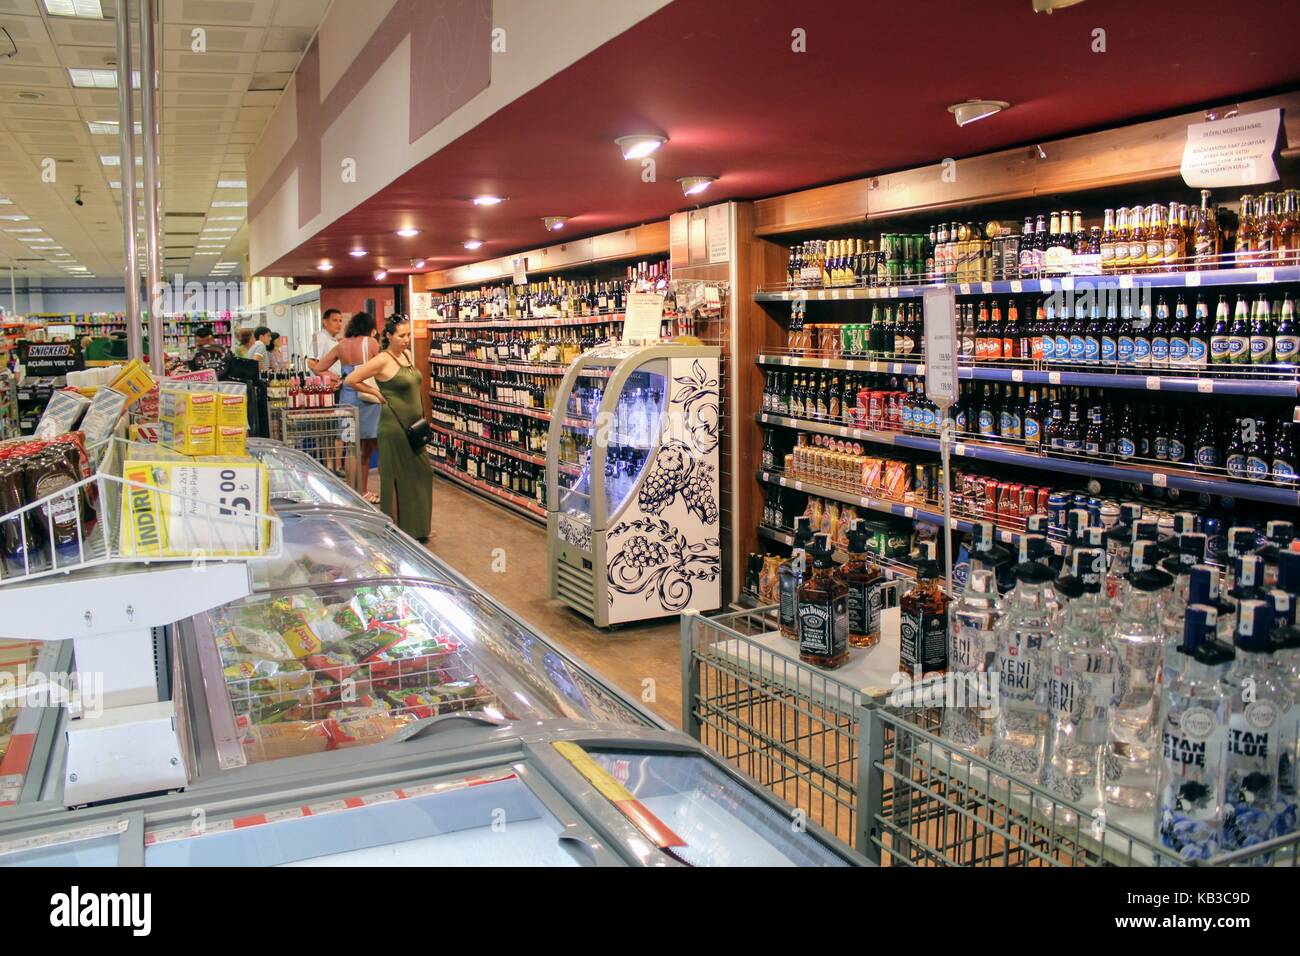 Inside the supermarket 'Migros' near the embankment (Alanya, Turkey). Stock Photo